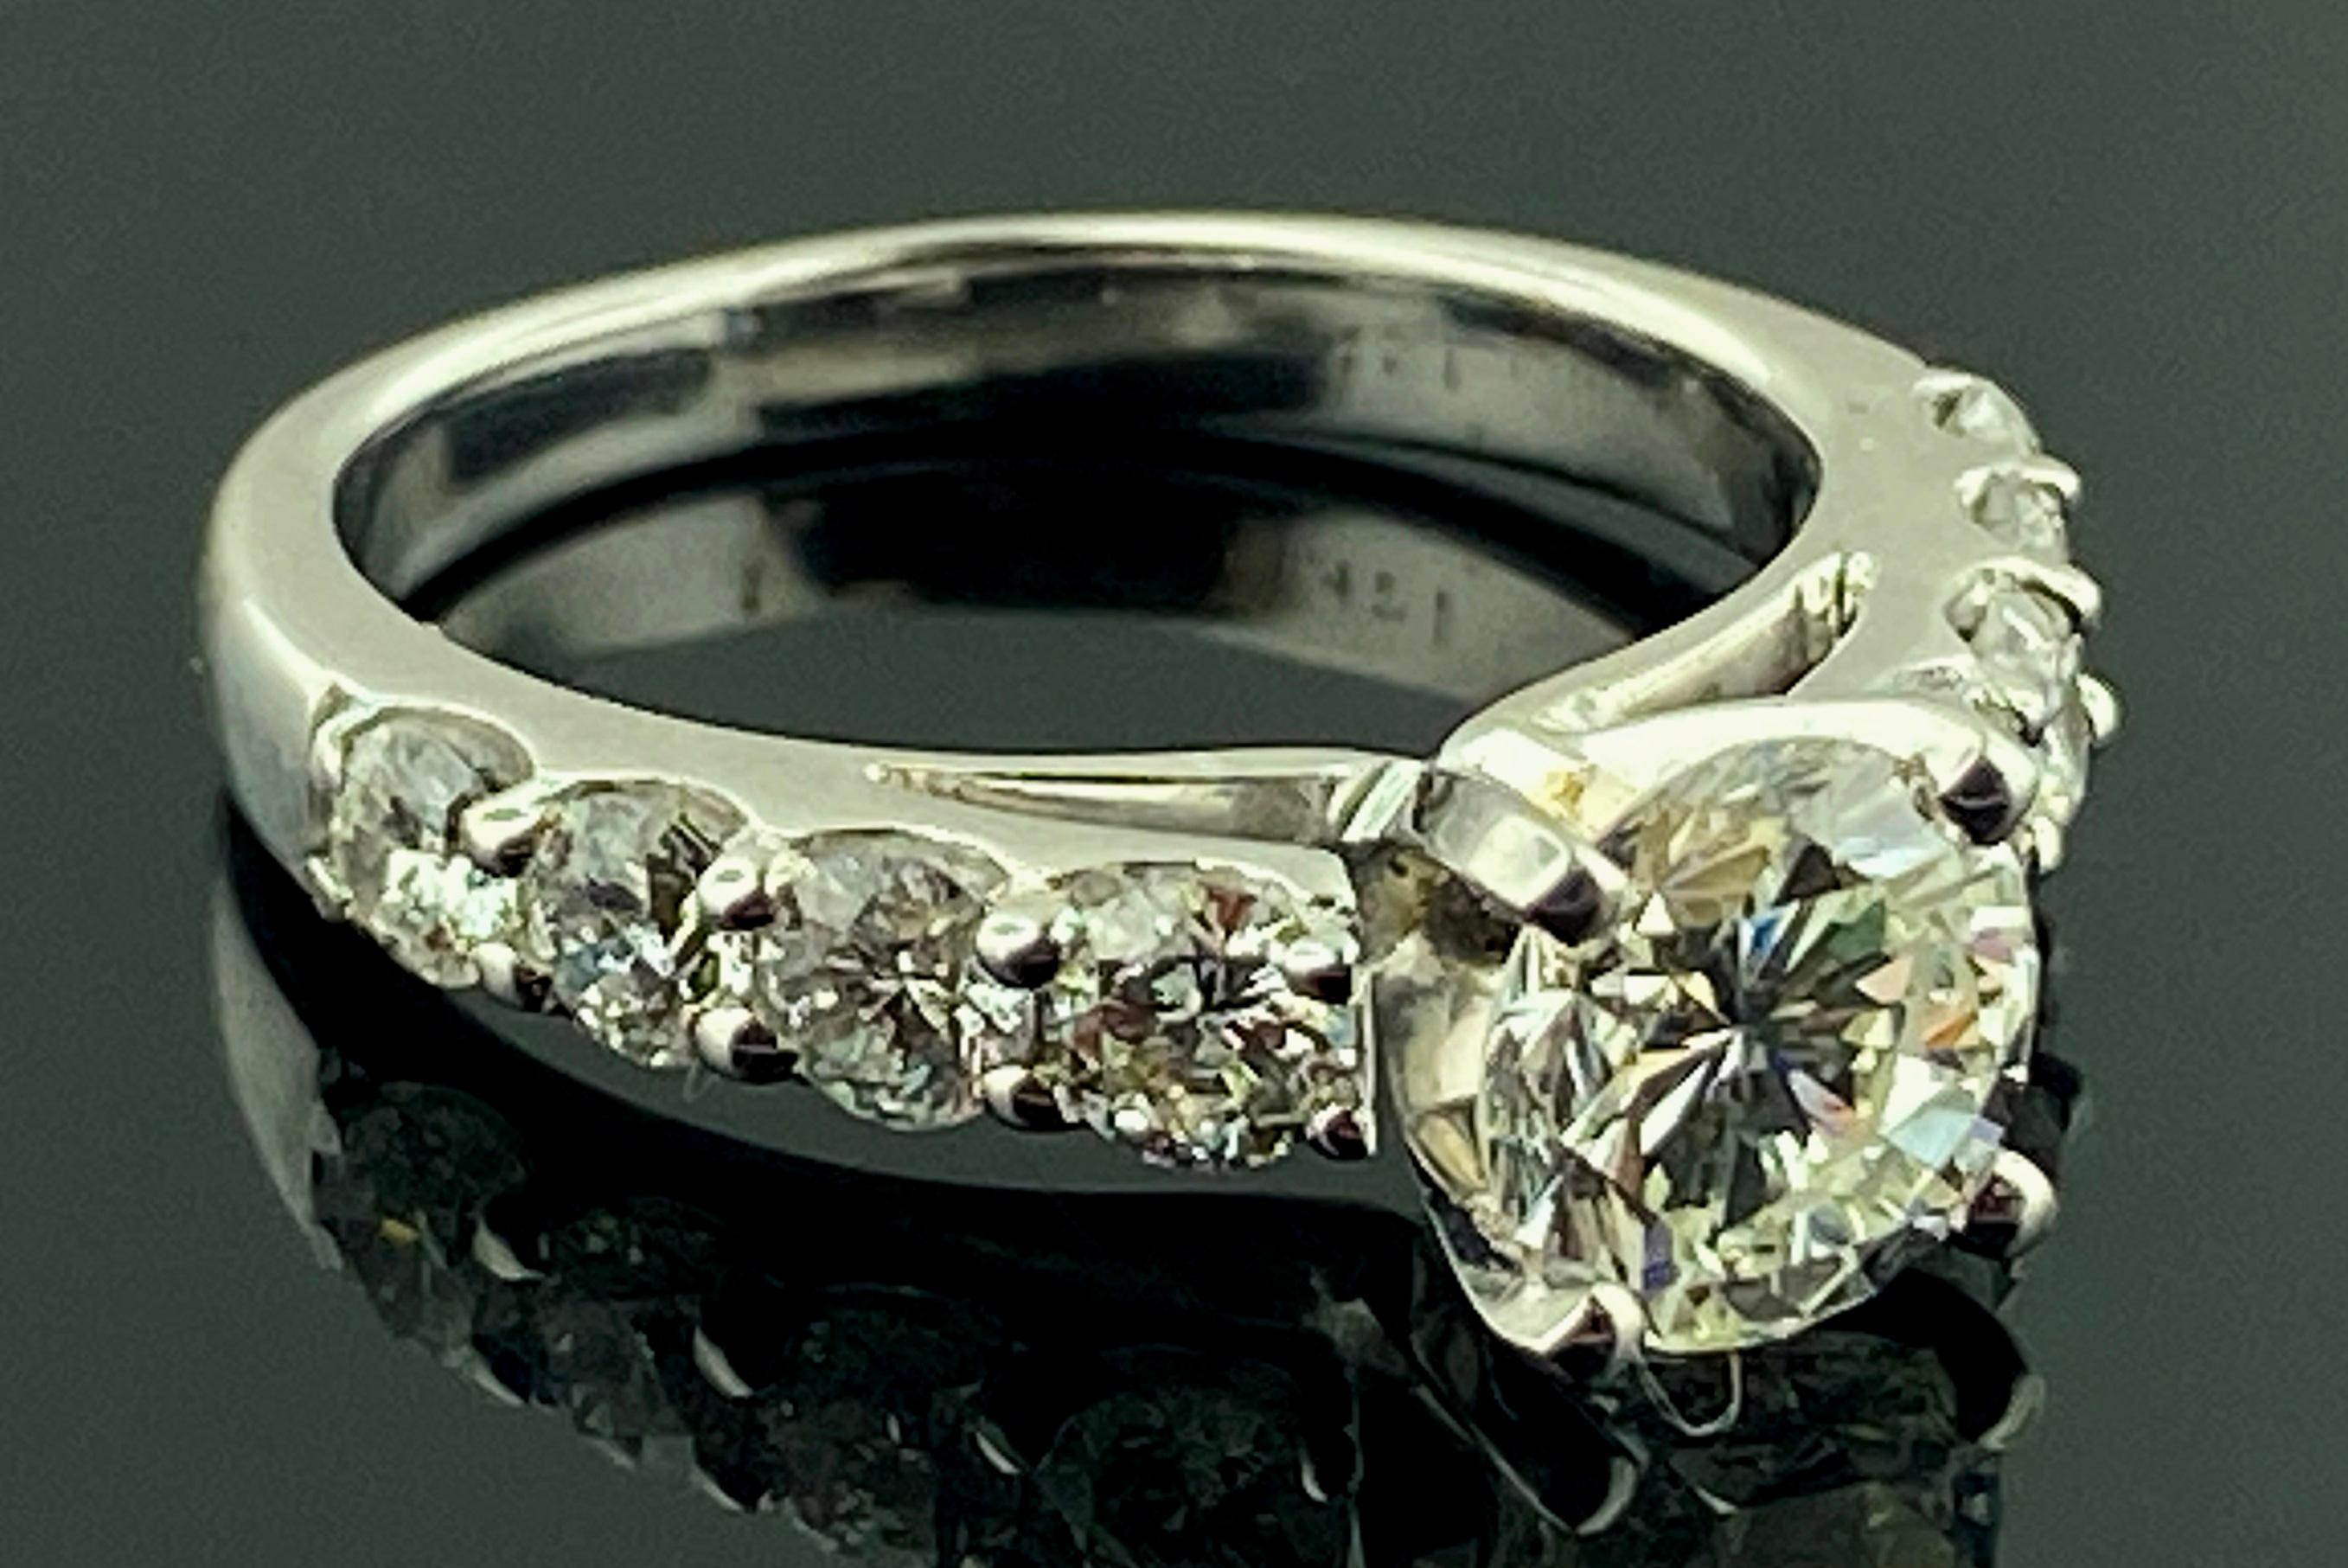 1.18 Carat Round Cut Center Diamond Engagement Ring in 14 Karat White Gold For Sale 1